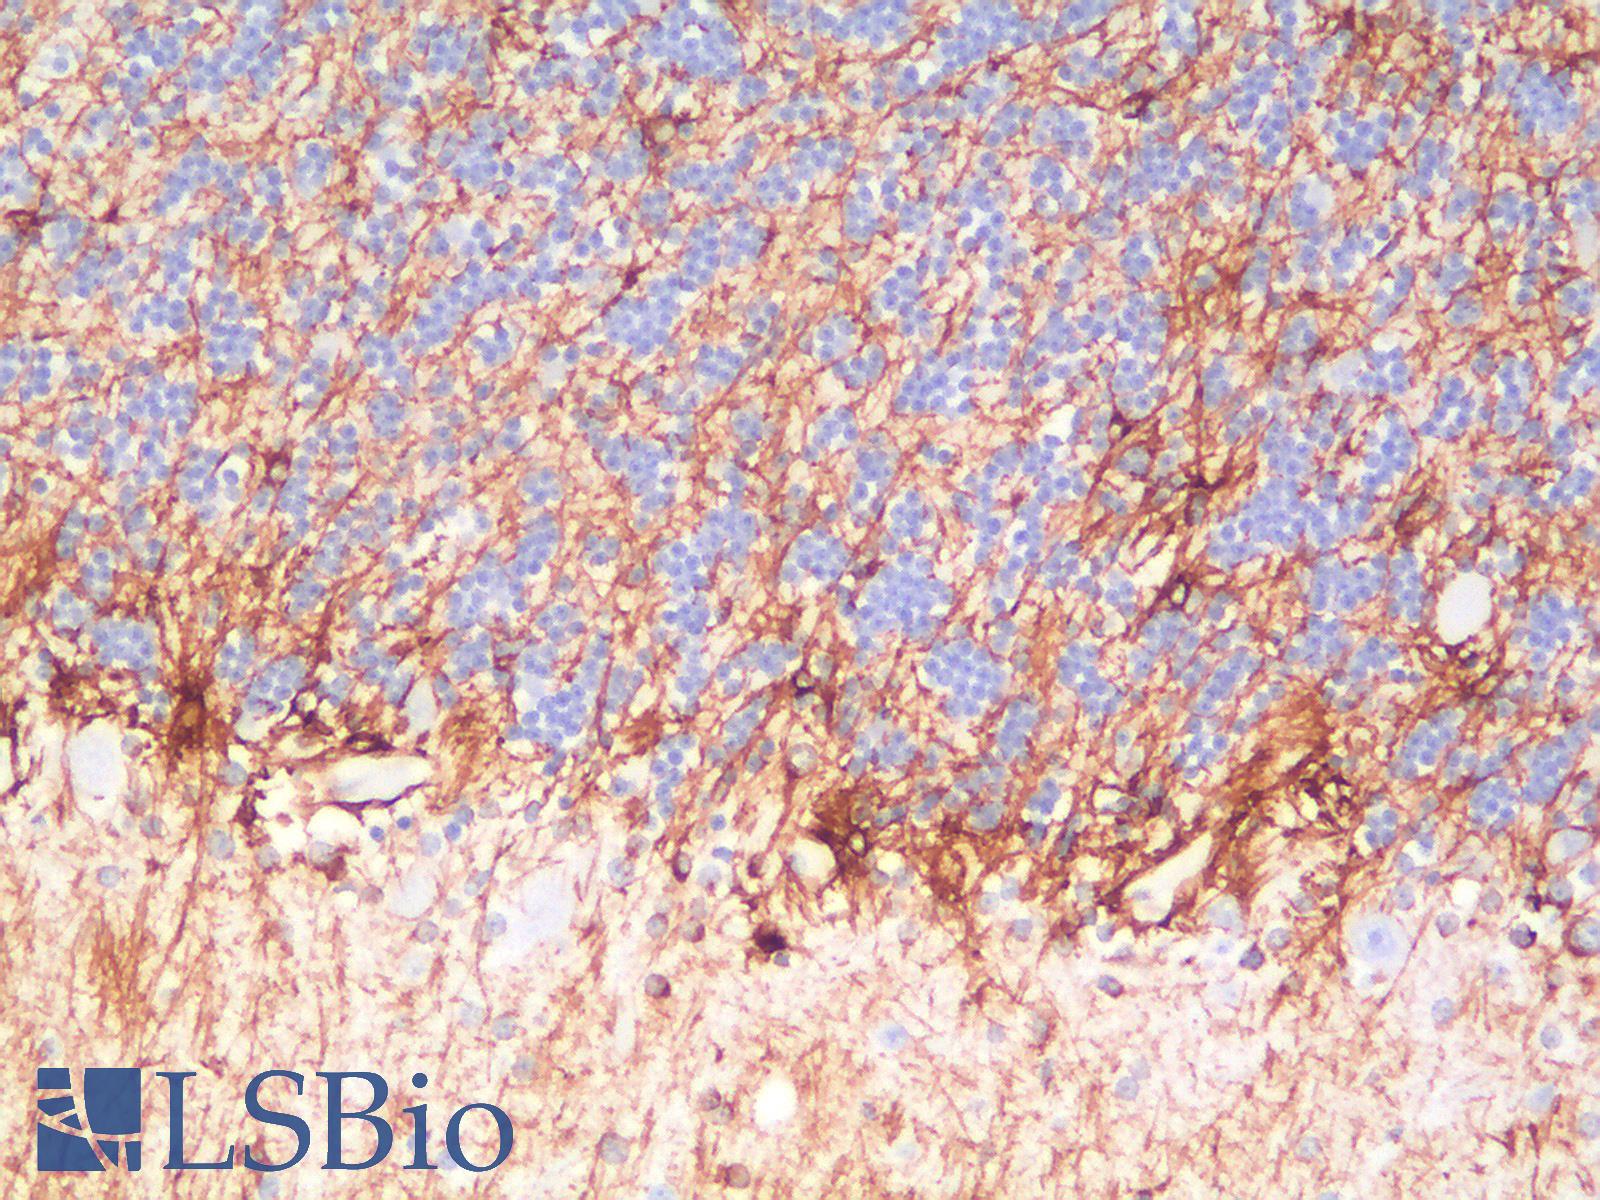 GFAP Antibody - Human Cerebellum: Formalin-Fixed, Paraffin-Embedded (FFPE)